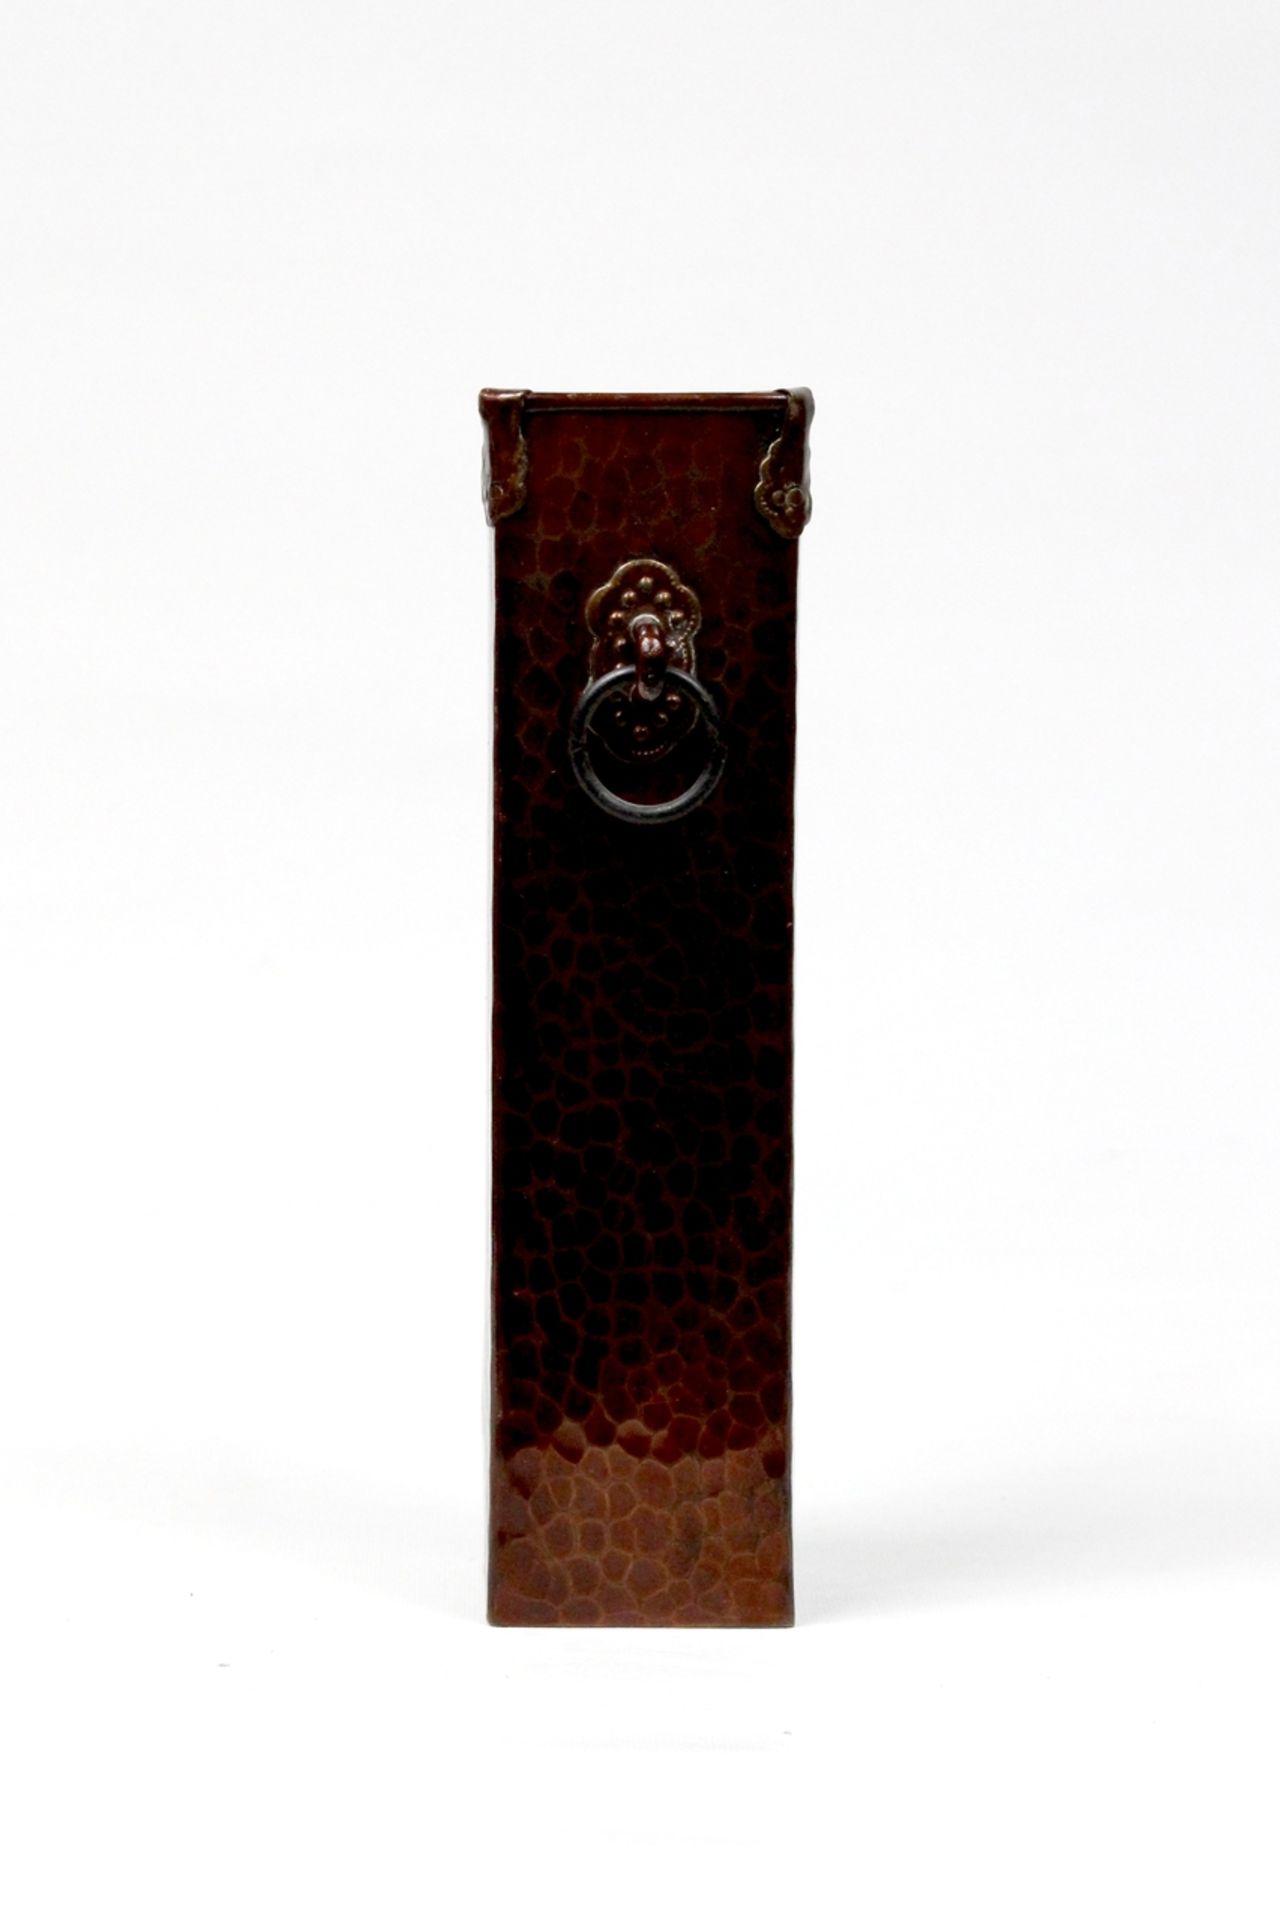 Japan Pinselhalter aus gehämmertem Kupfer in Schlangenhautoptik, Meiji Periode 19.Jhdt. - Image 2 of 3